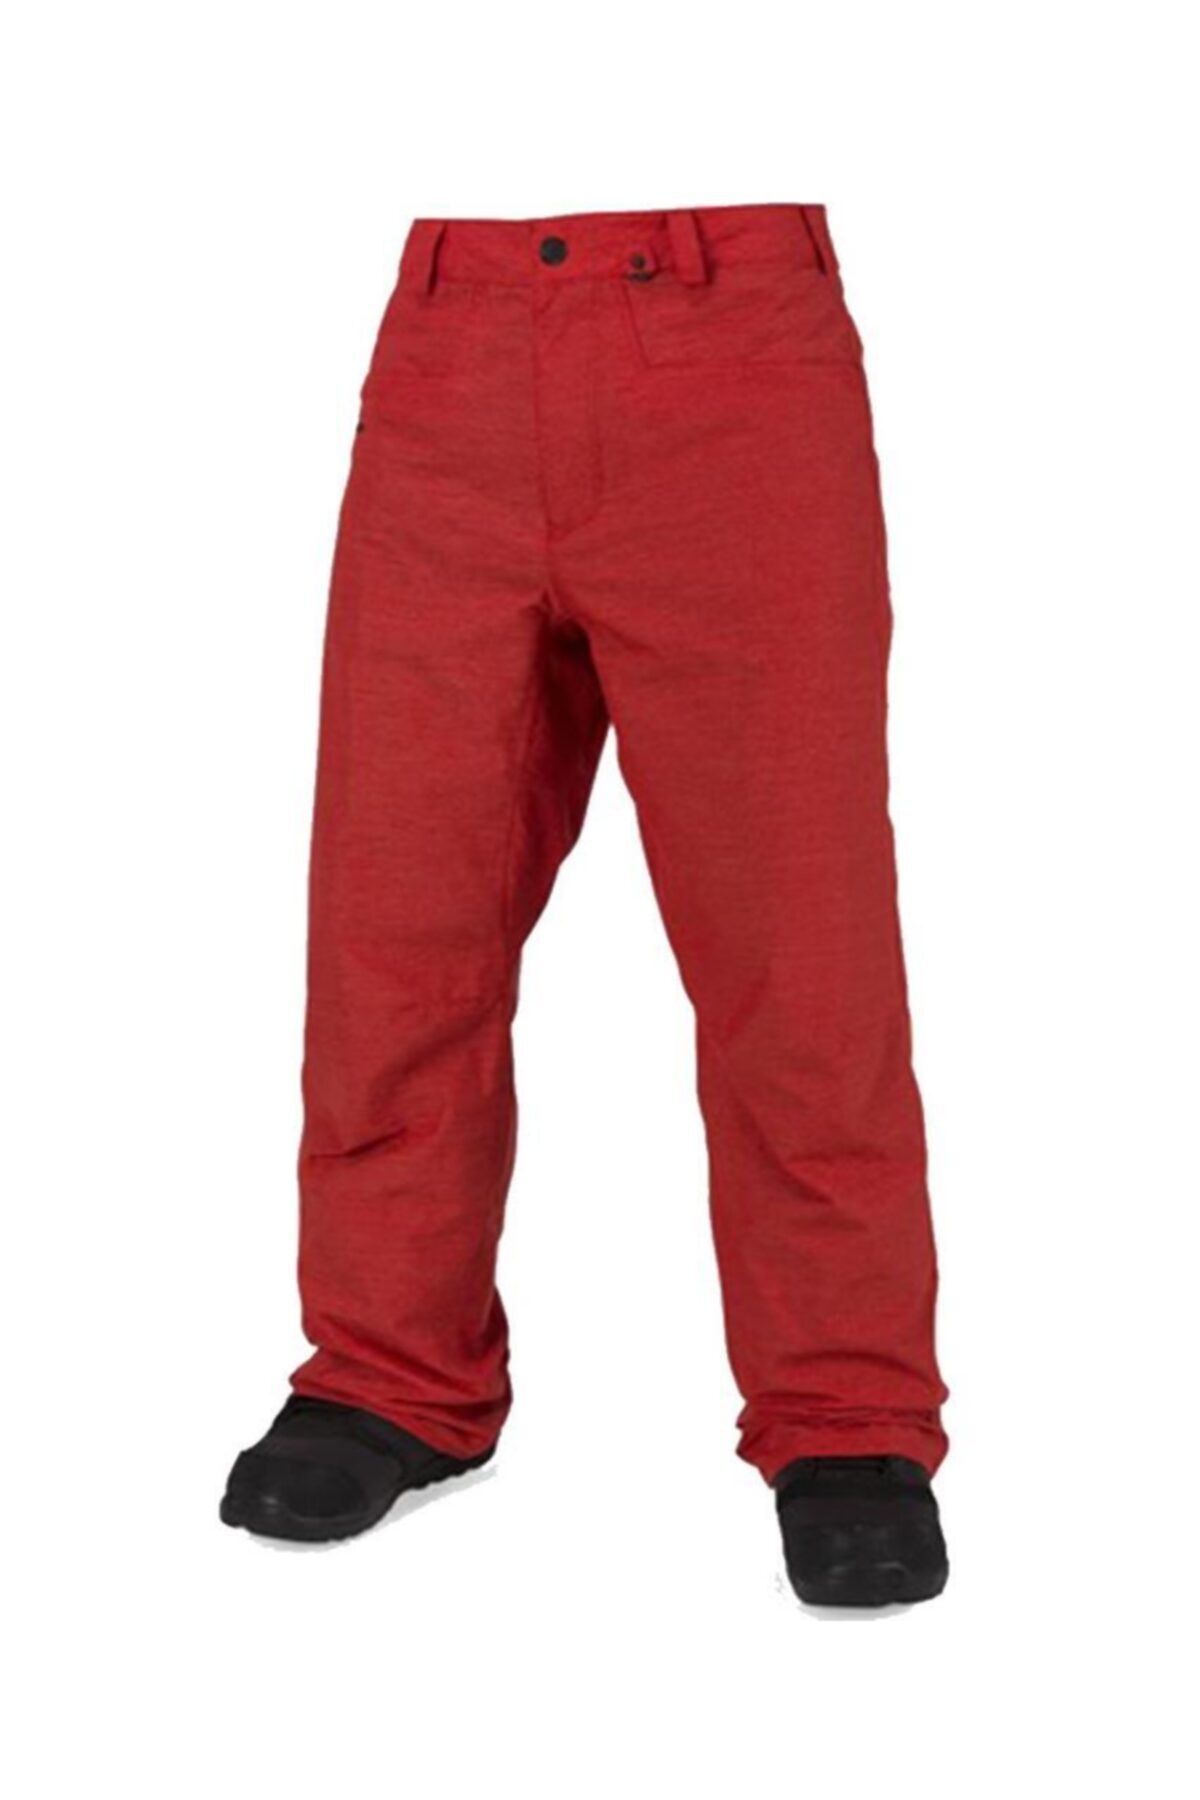 Volcom Carbon Erkek Snowboard Pantolonu Kırmızı